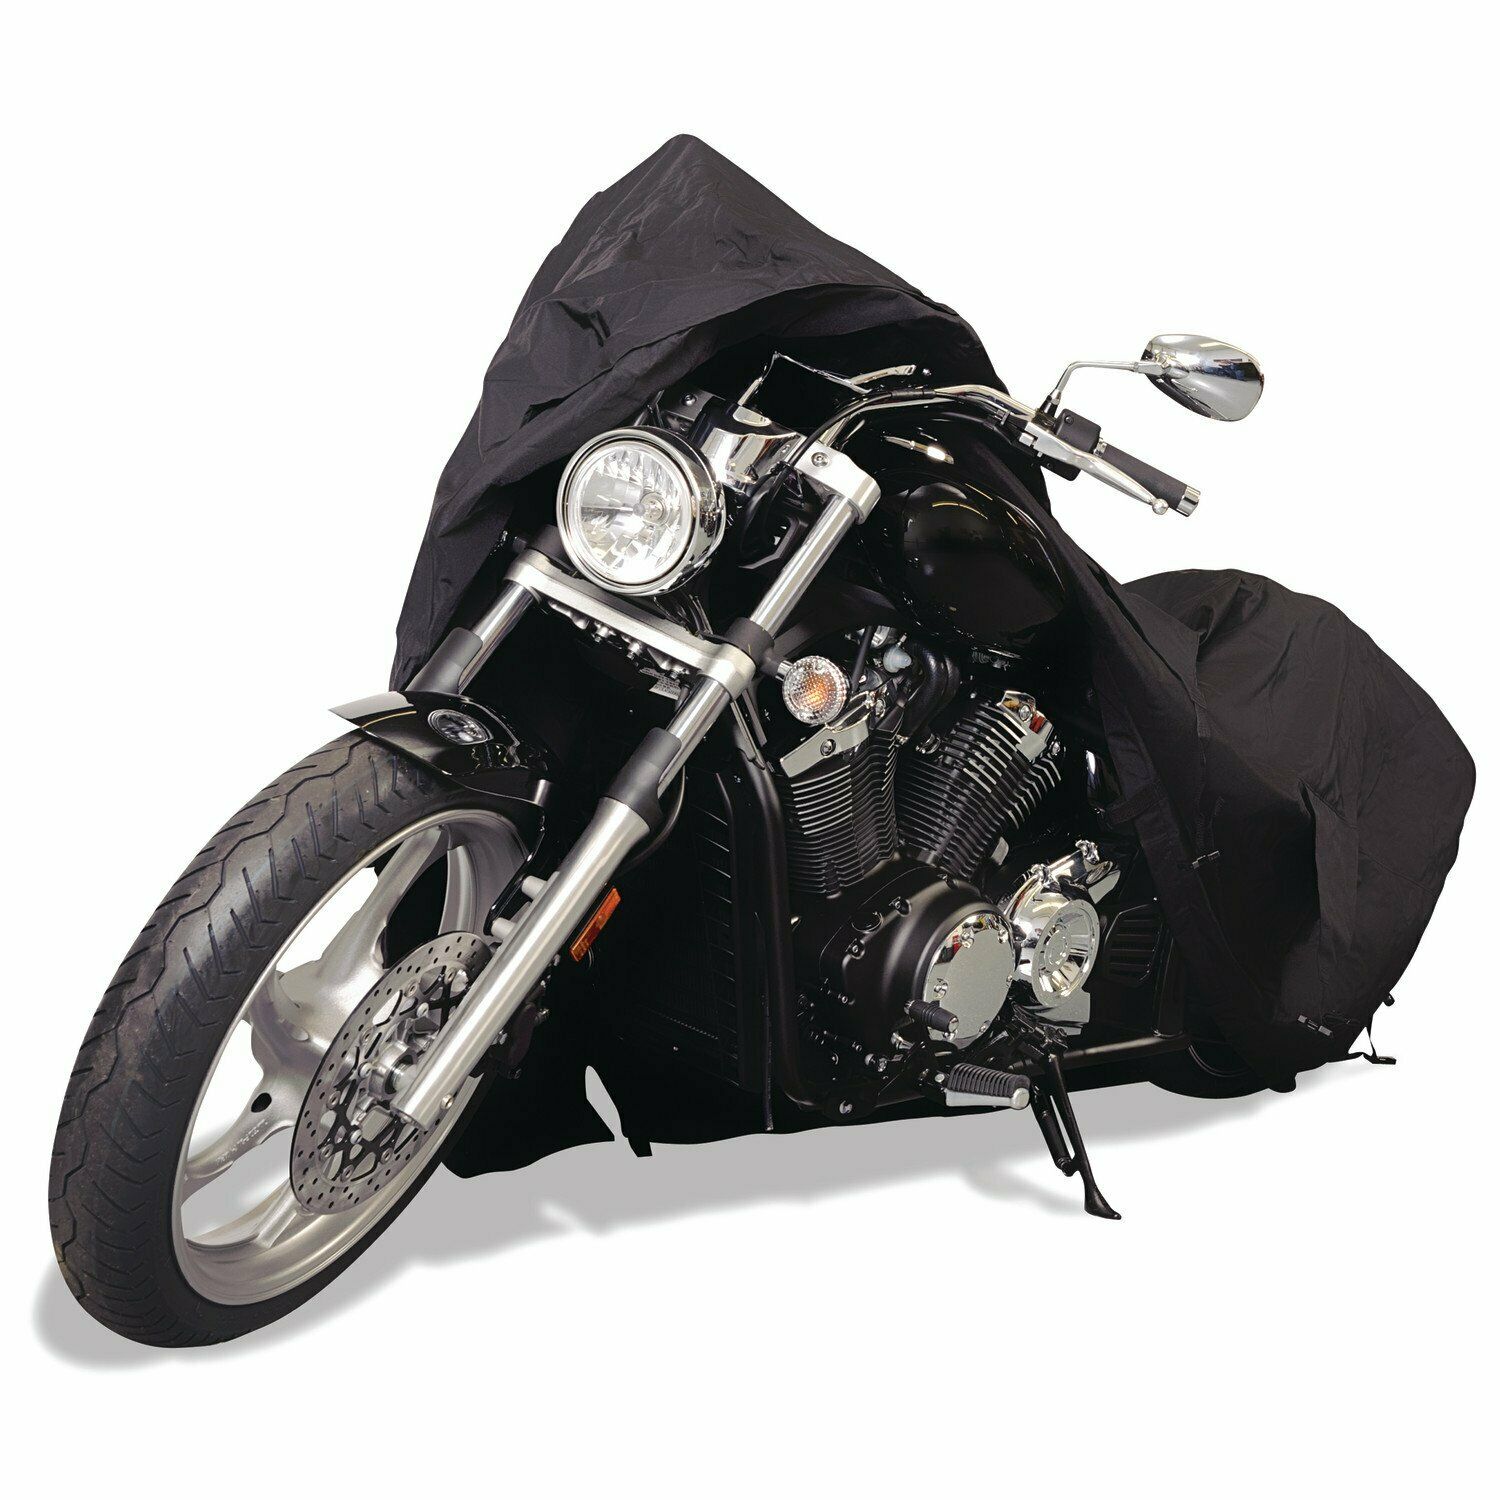 Budge Power Sports Industries Waterproof Semi-custom Motorcycle Cover Mc-15